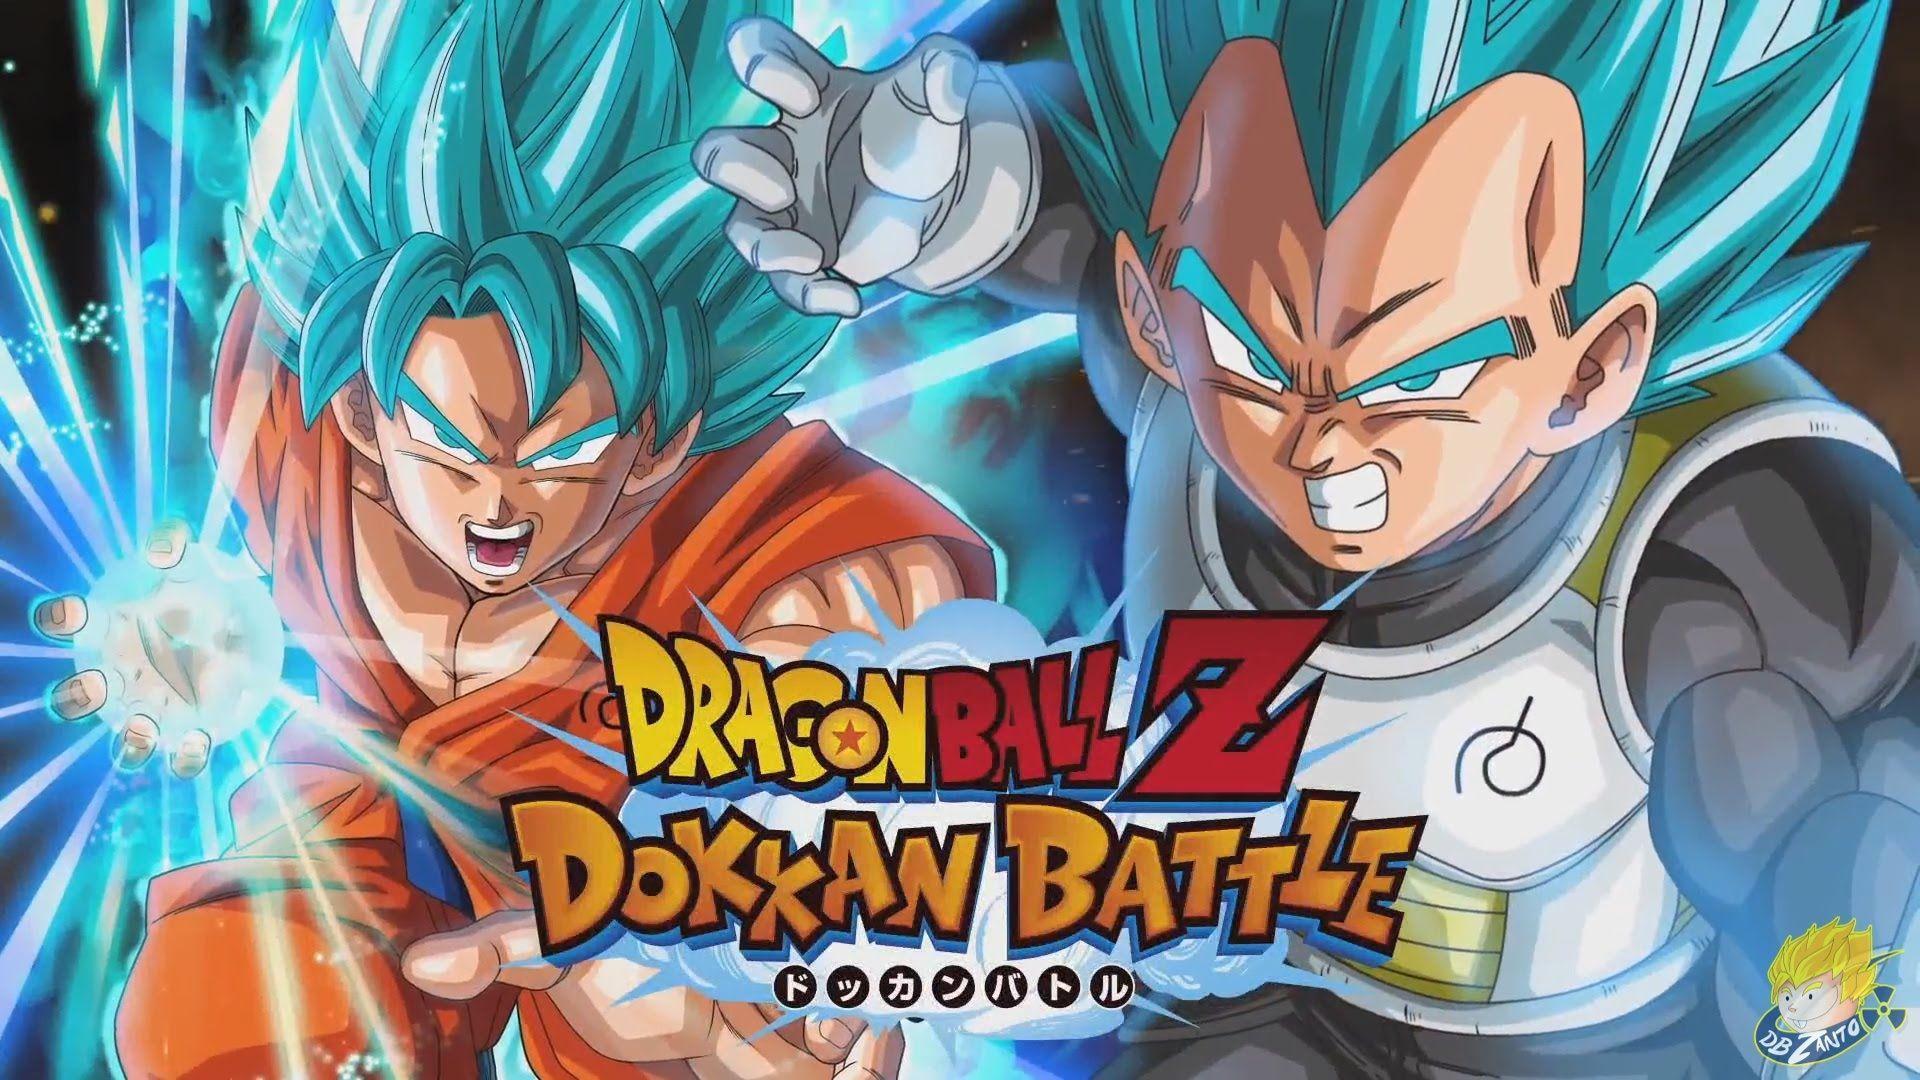 Dragon Ball Z Dokkan Battle Goku And Vegeta Wallpapers